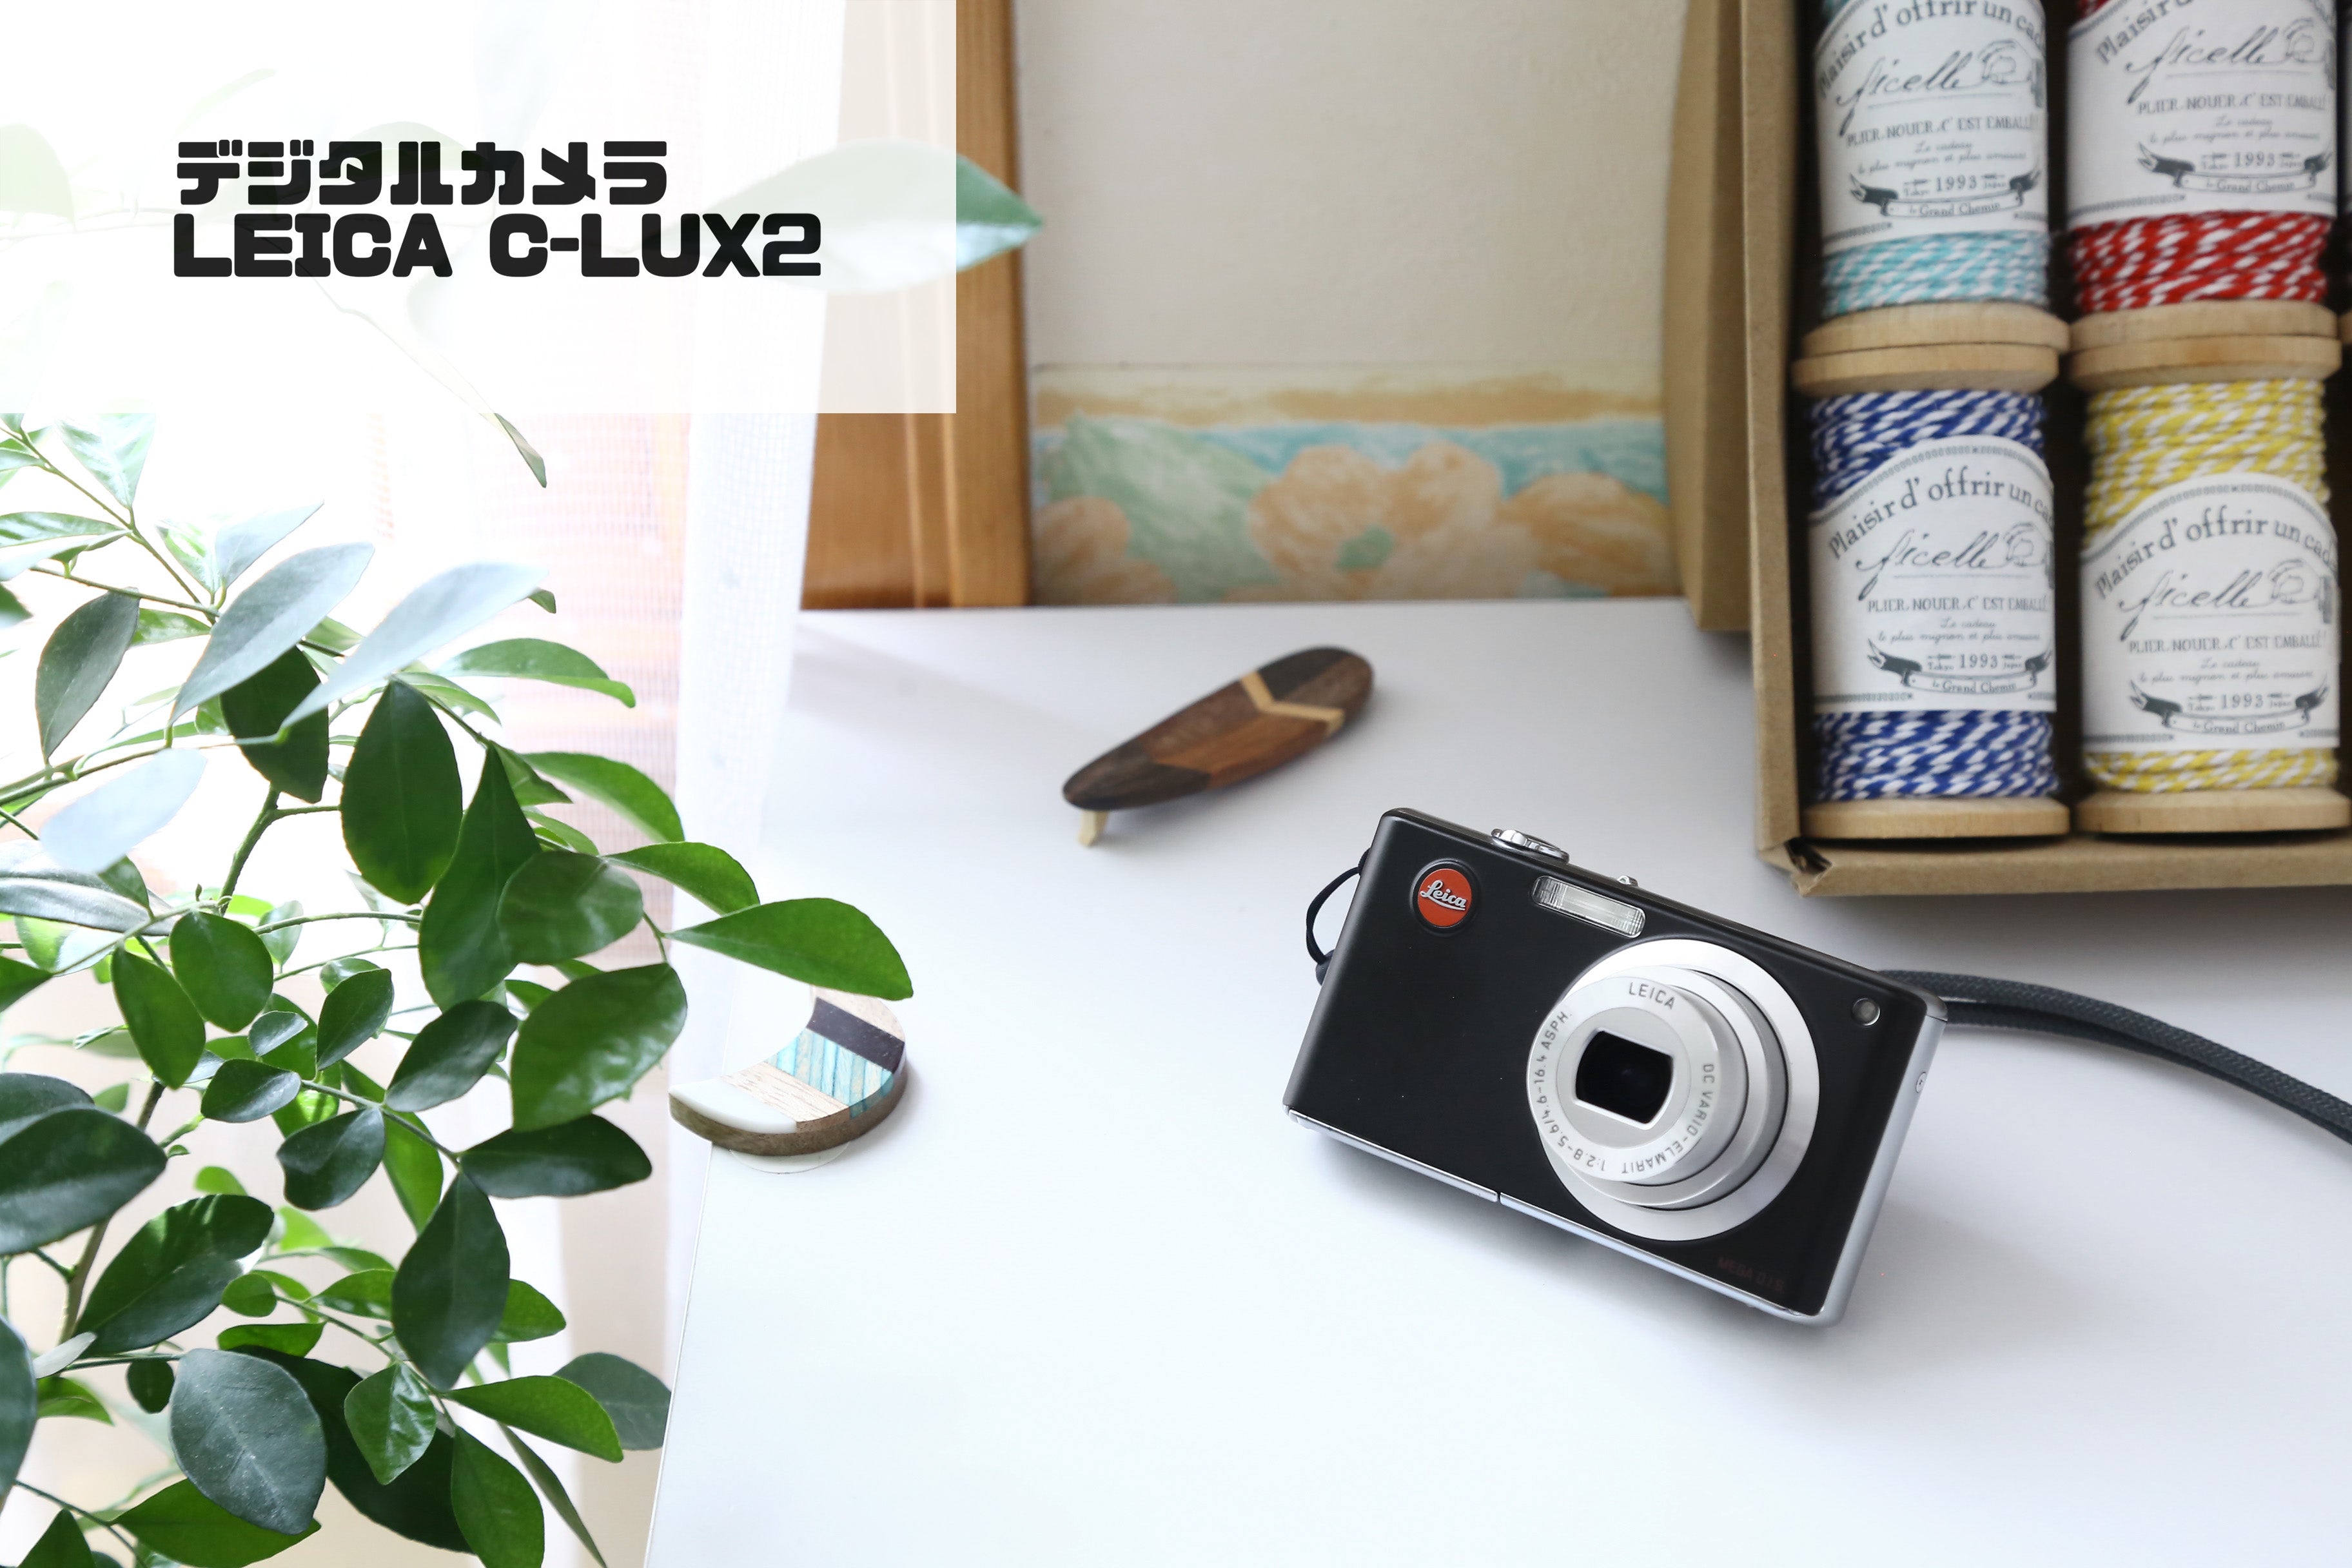 Leica ライカ C-LUX 2 オールドコンデジ-silversky-lifesciences.com